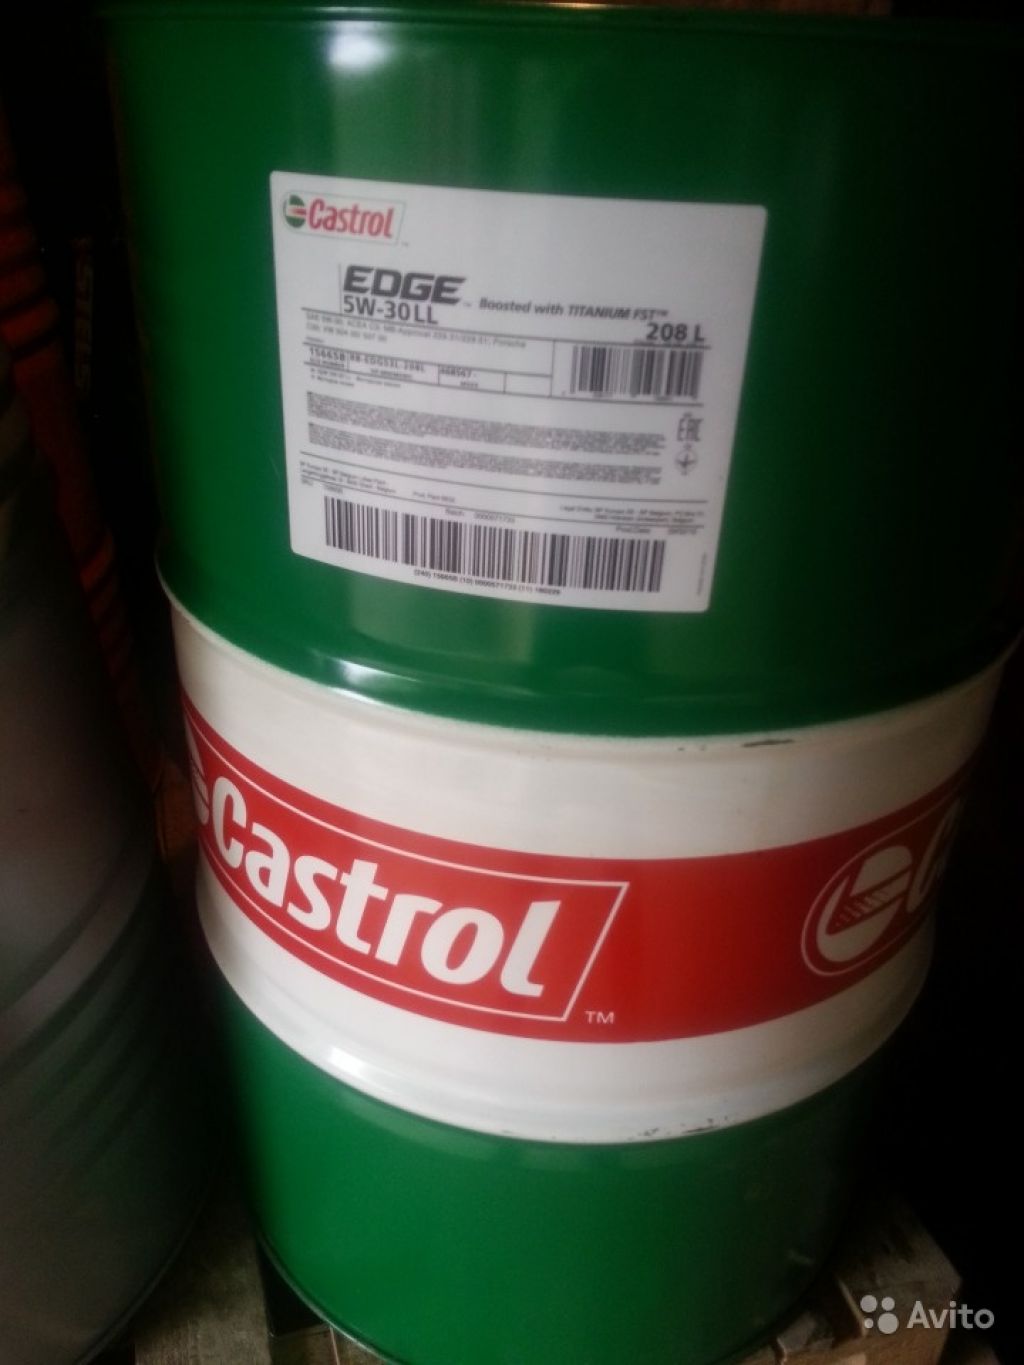 Castrol edge Titanium FST 5W-30 LL (208) масло в Москве. Фото 1